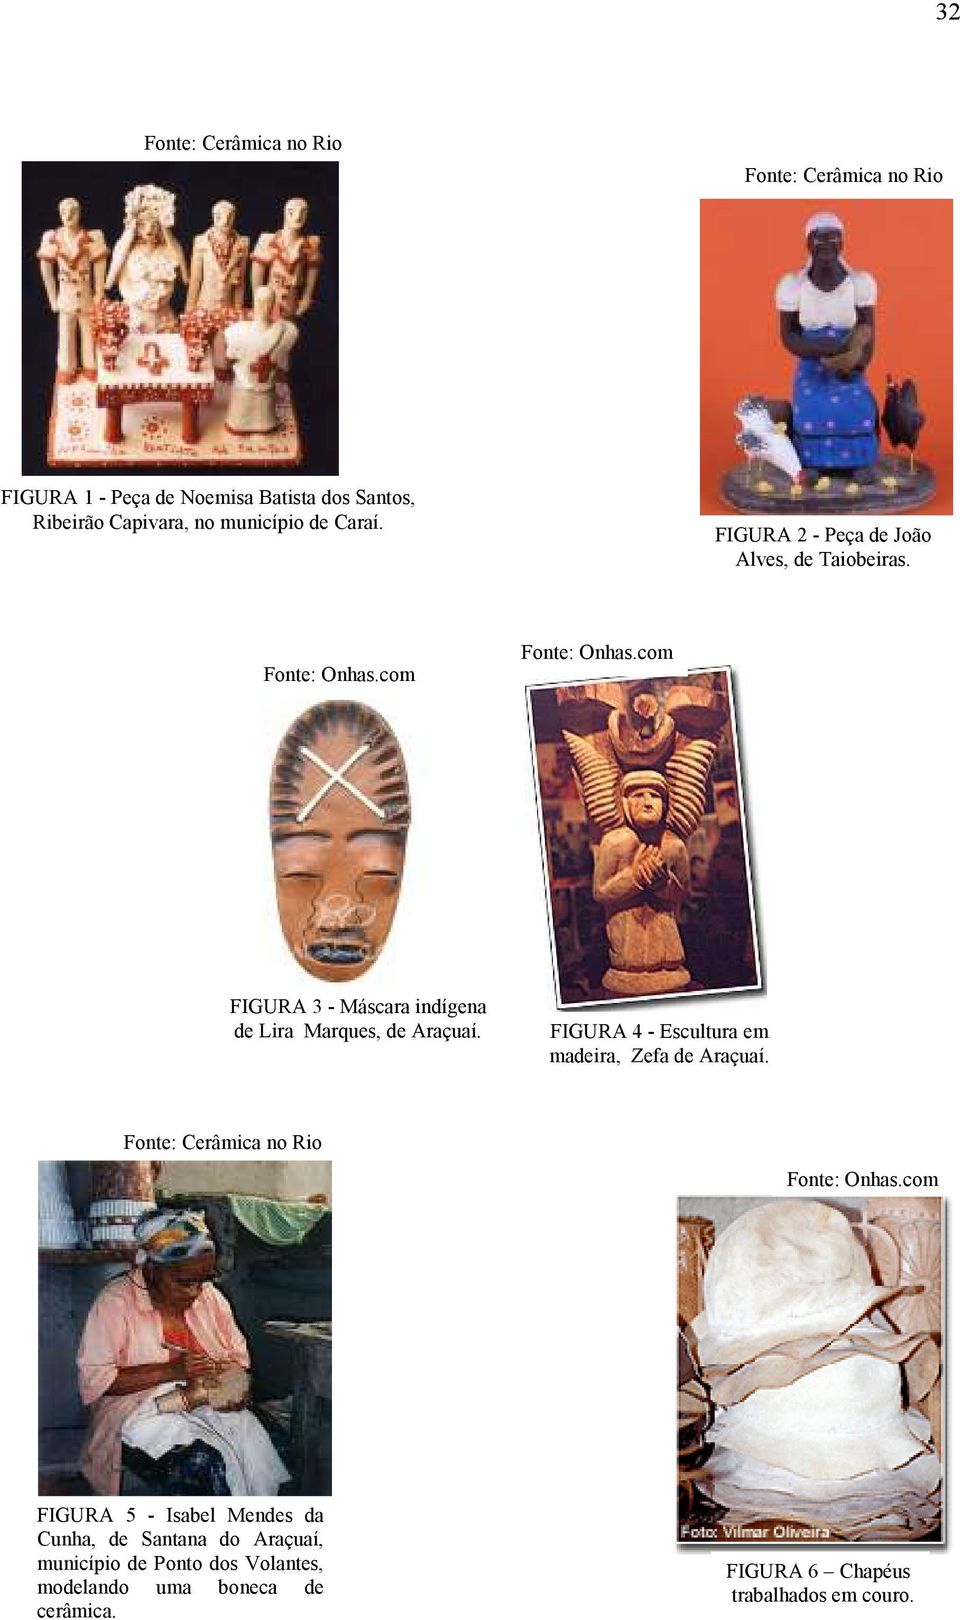 com FIGURA 3 - Máscara indígena de Lira Marques, de Araçuaí. FIGURA 4 - Escultura em madeira, Zefa de Araçuaí.